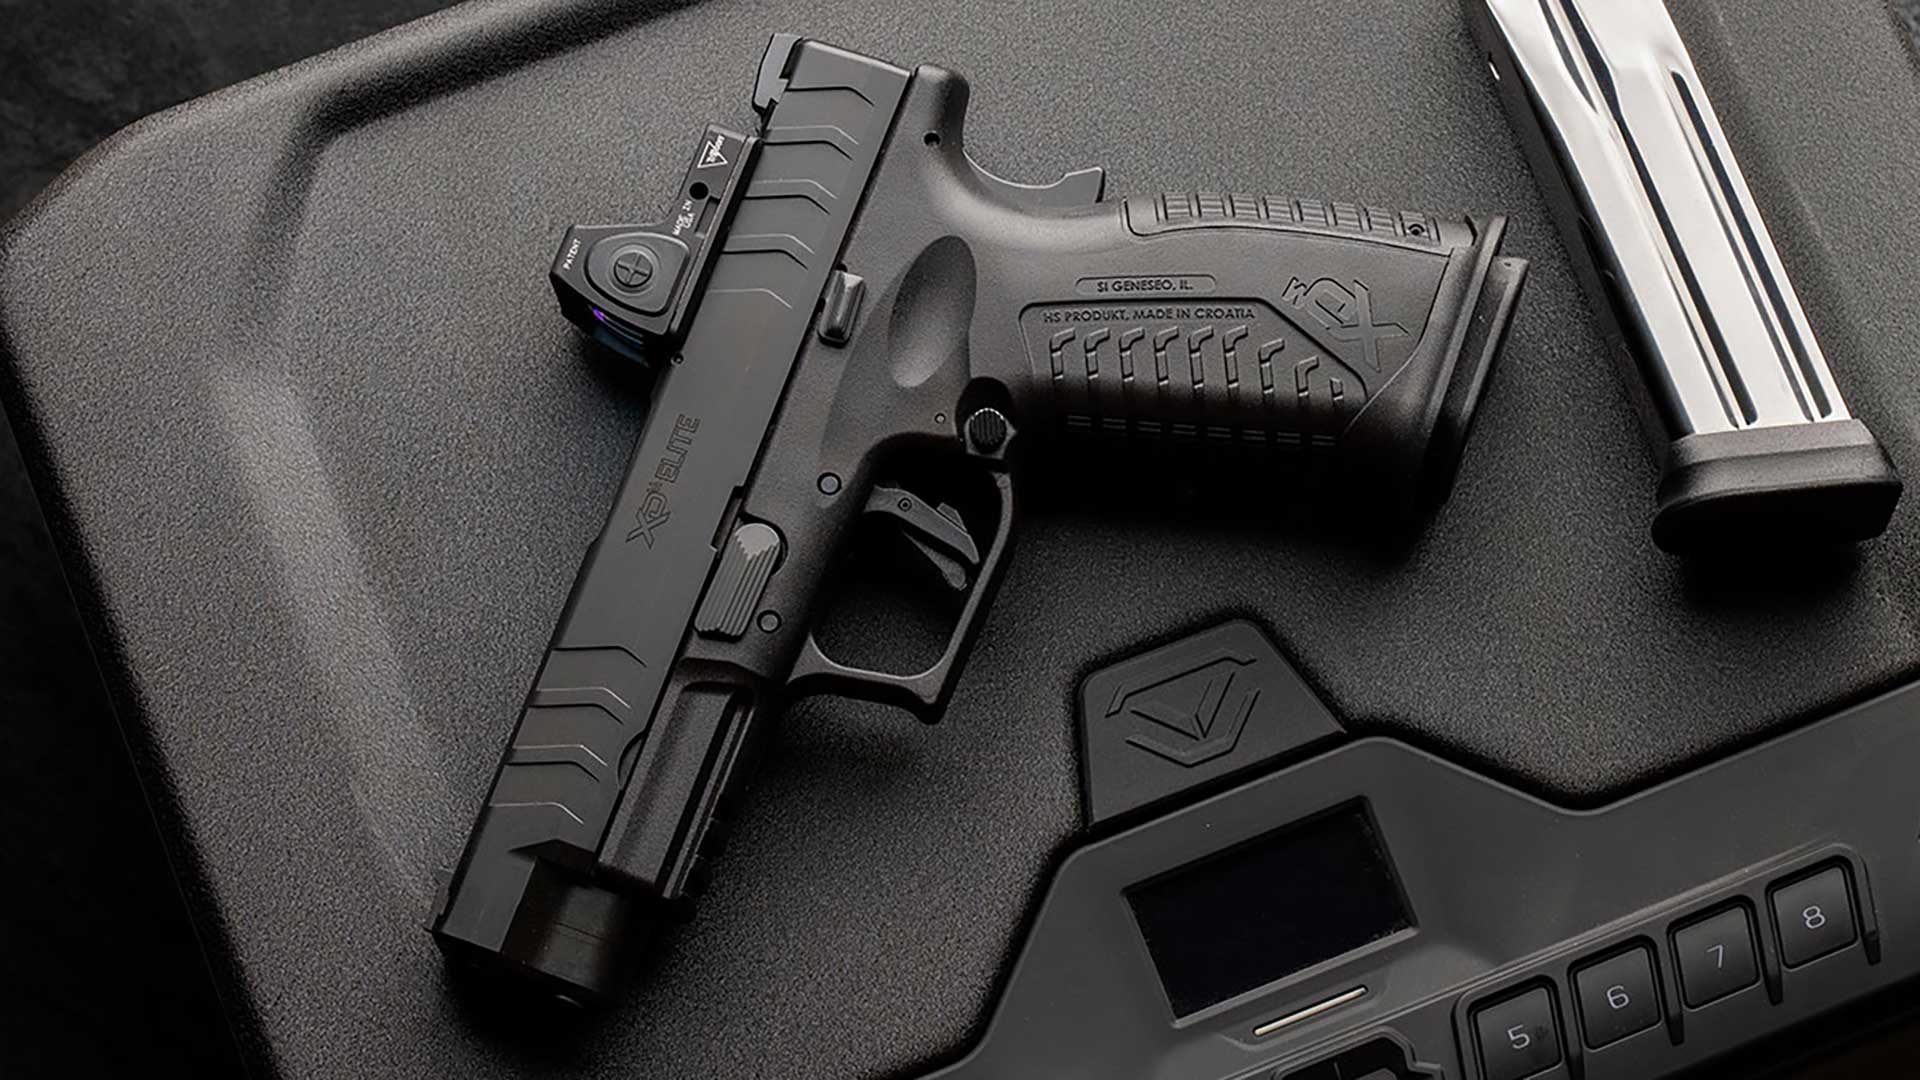 compact 10mm pistol